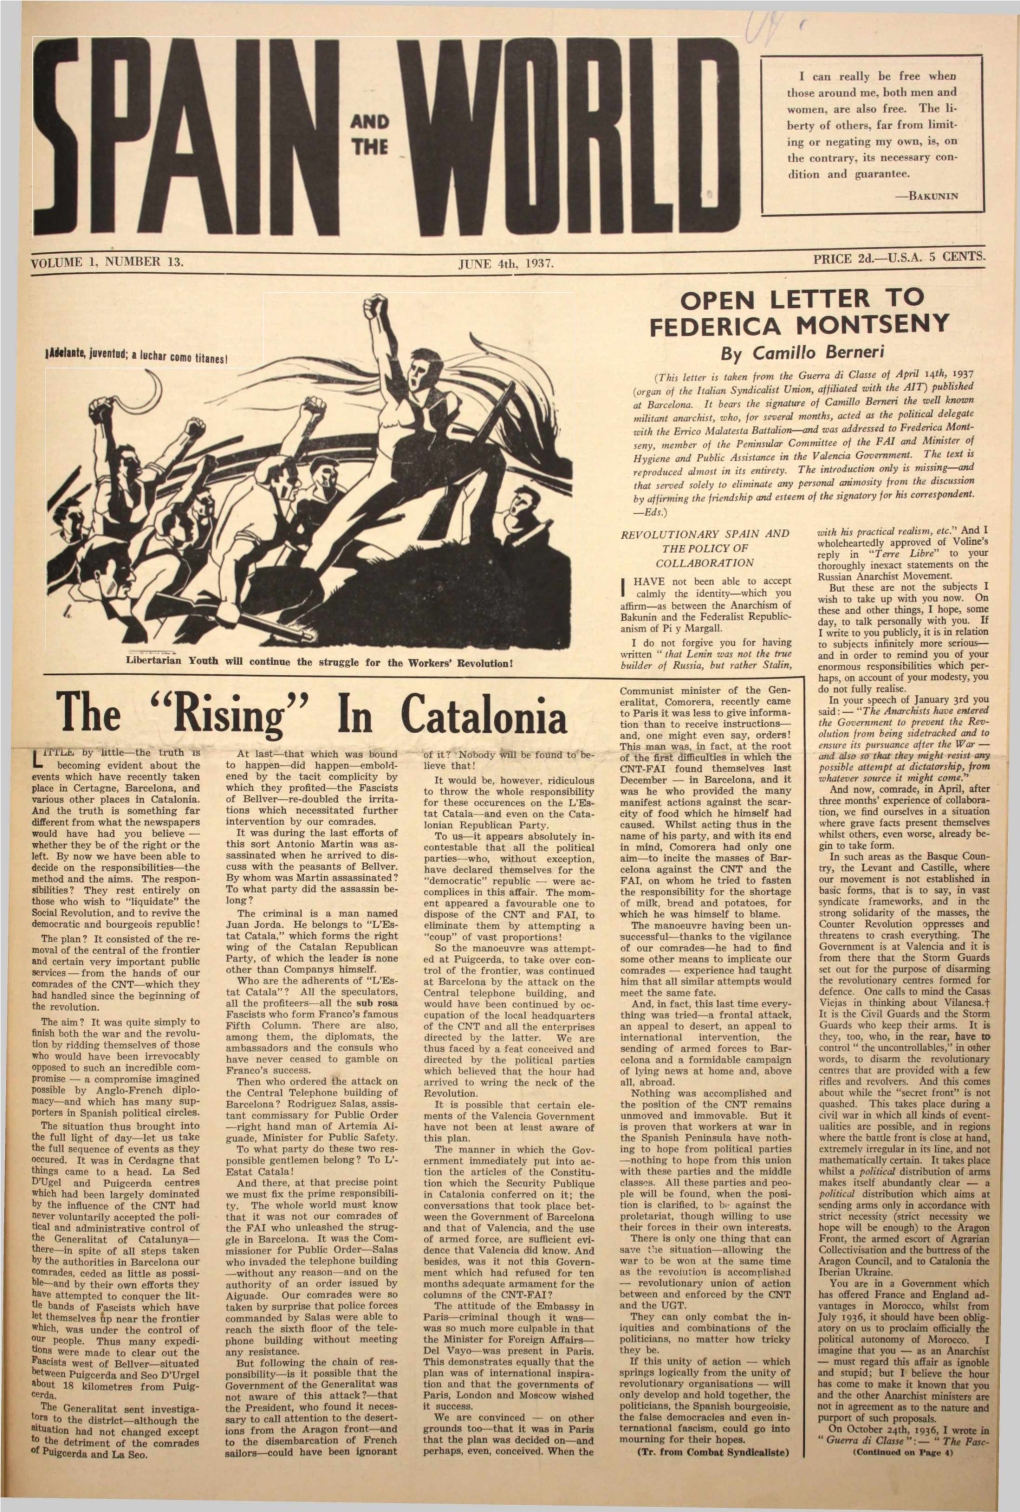 The “ Rising” in Catalonia